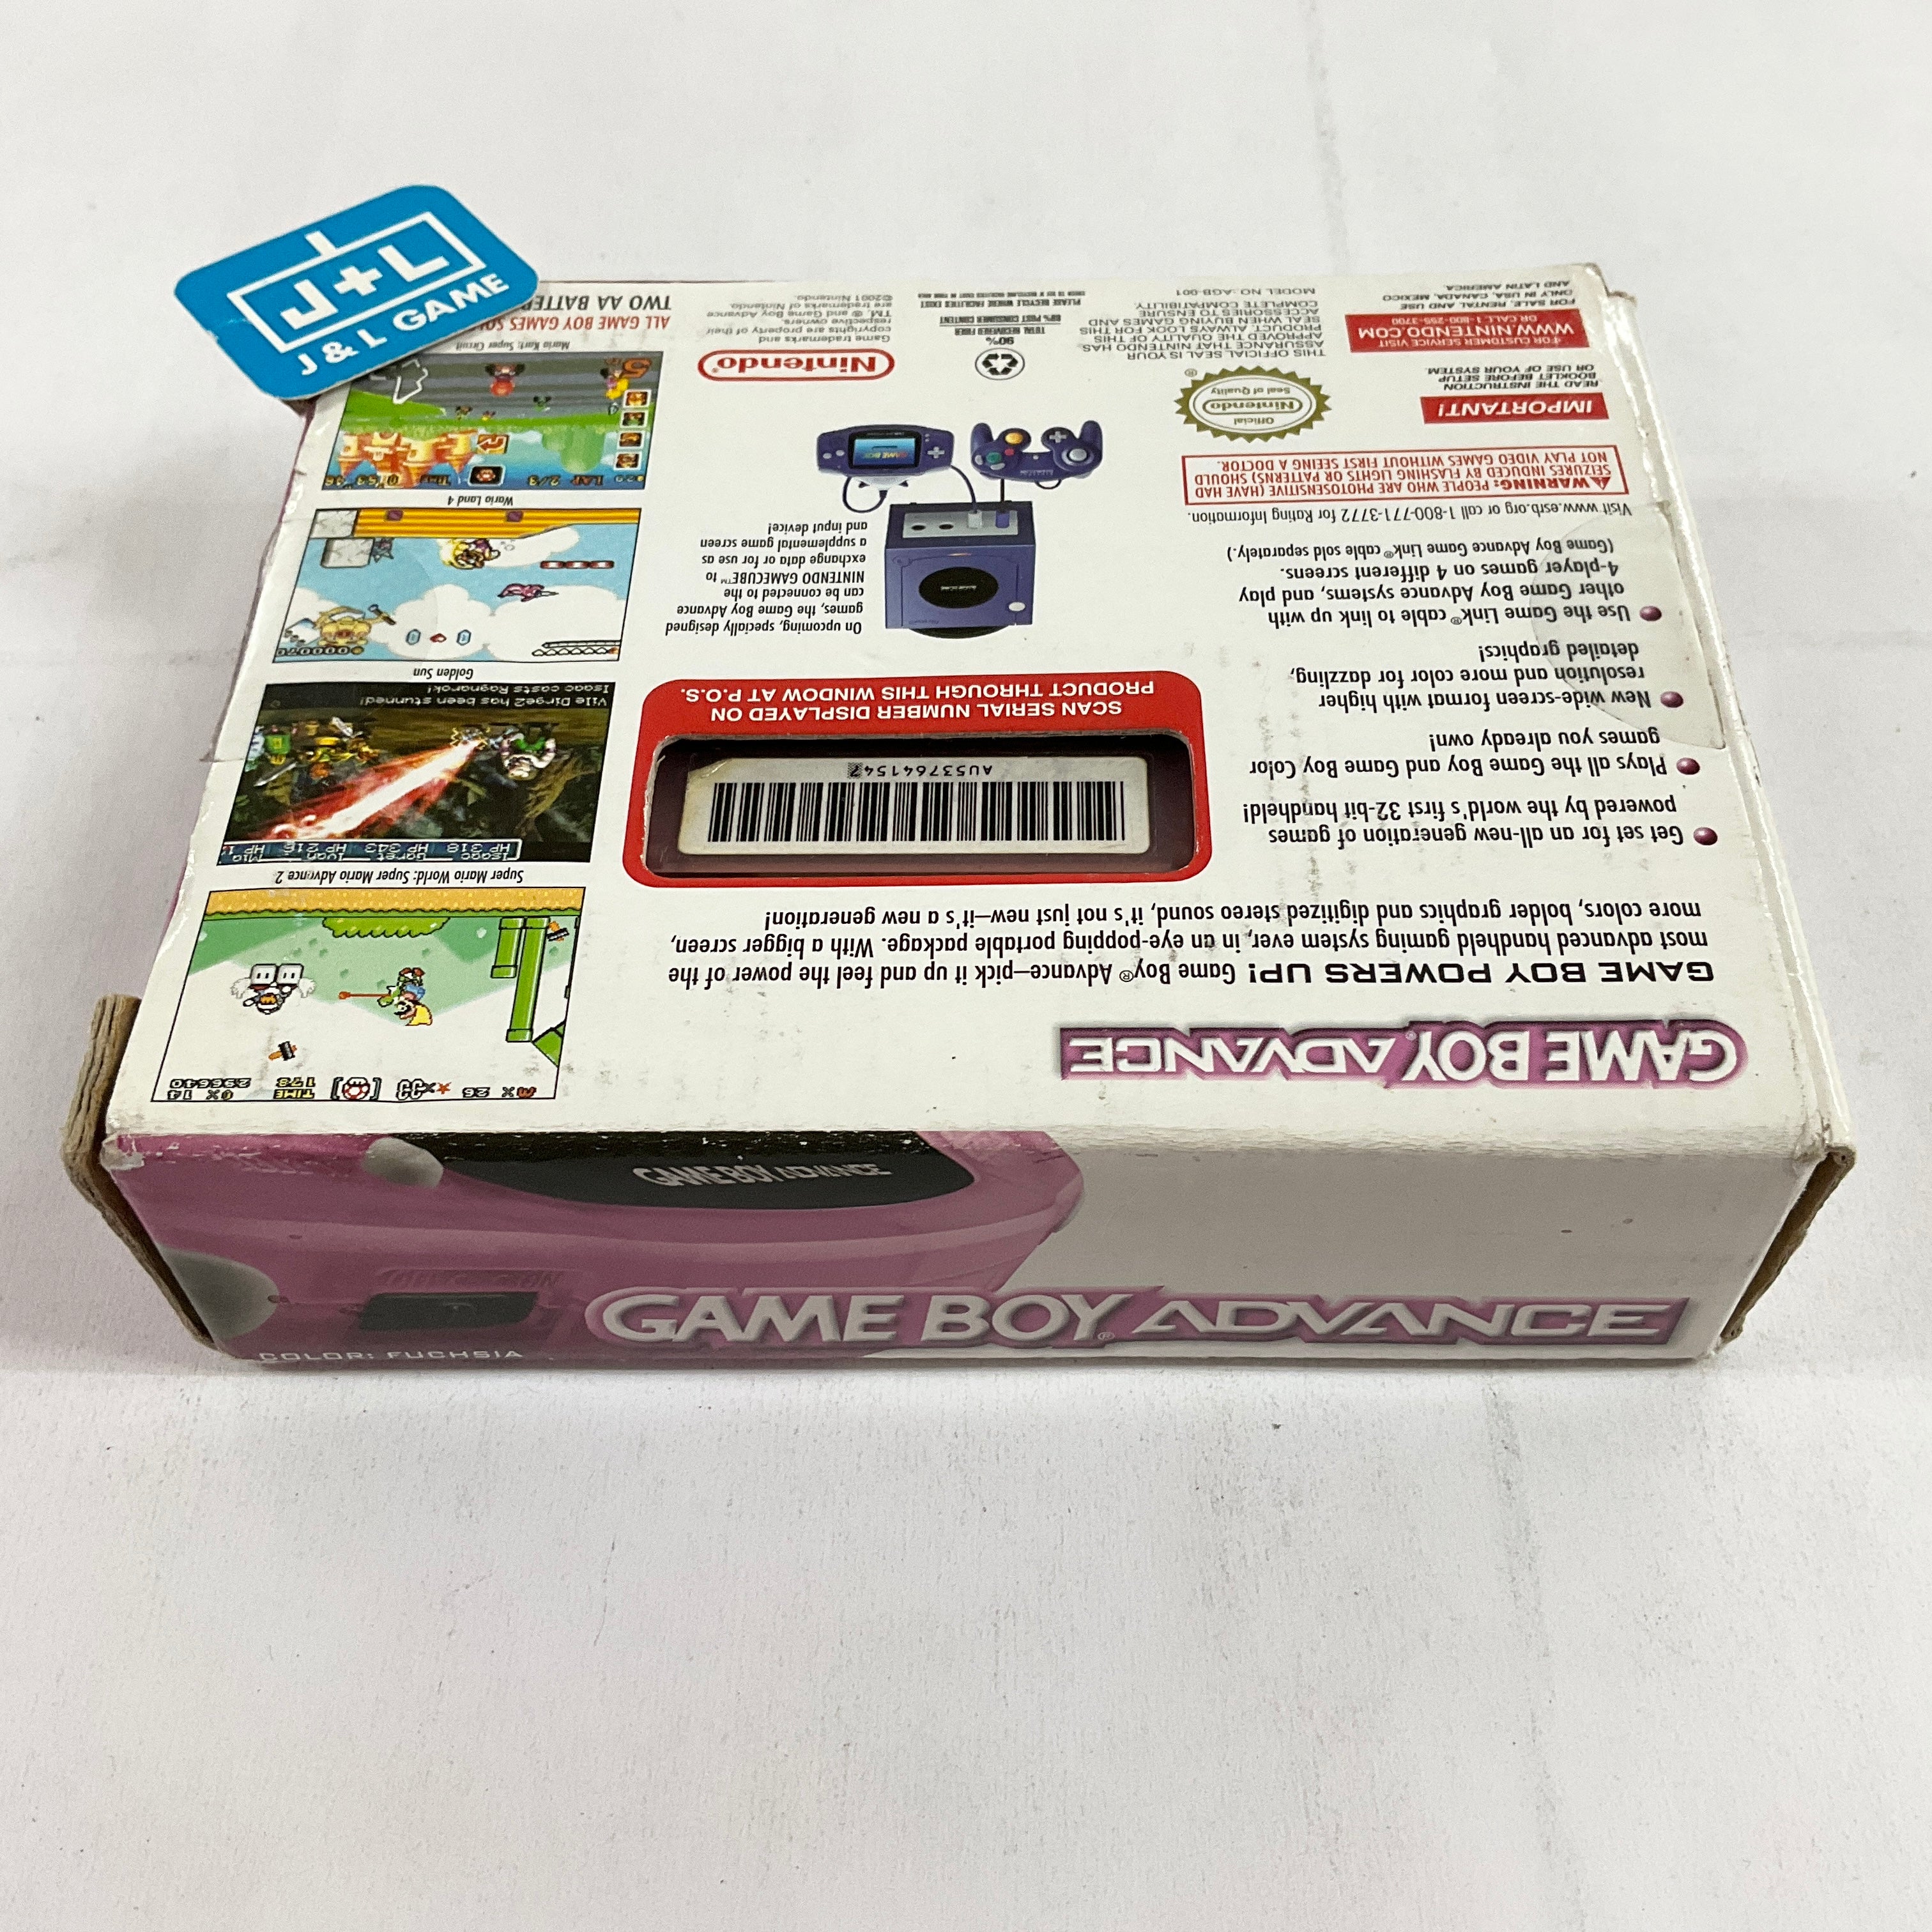 Nintendo Game Boy Advance (Pink) - (GBA) Game Boy Advance [Pre-Owned] Consoles Nintendo   